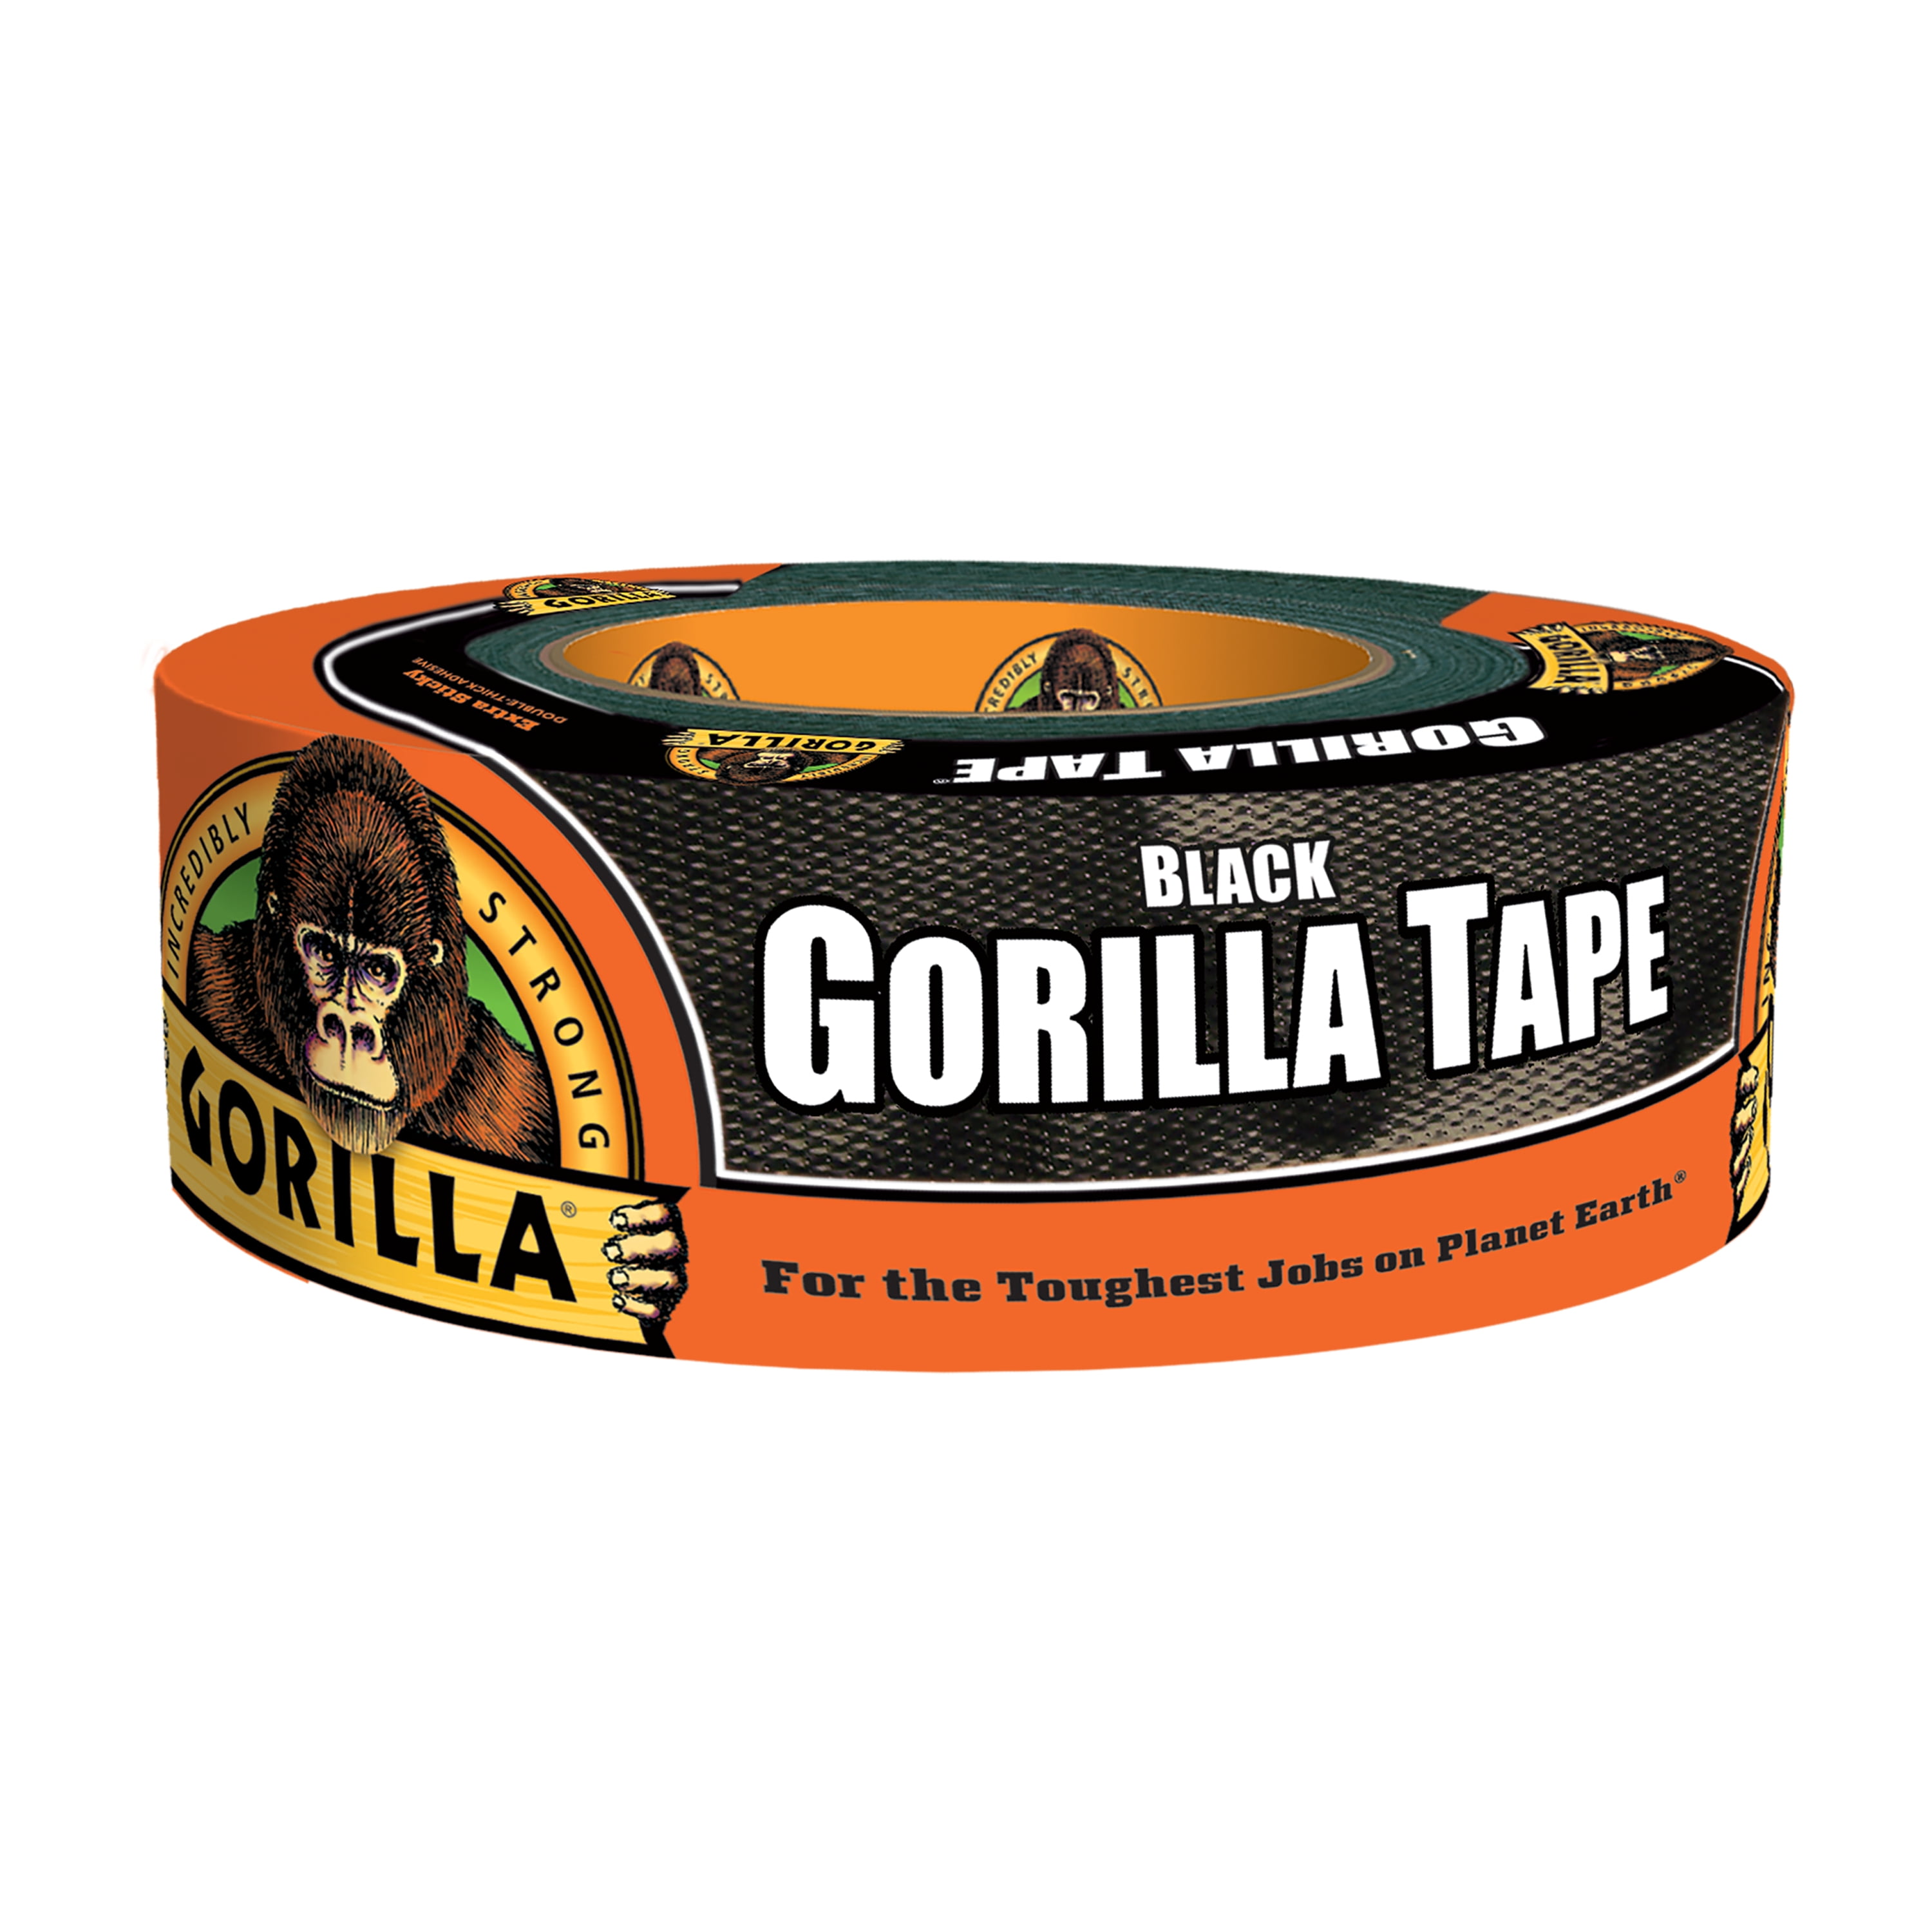 Gorilla Black Duct Tape 1.88" x 12 yd Pack of 3 Black, 